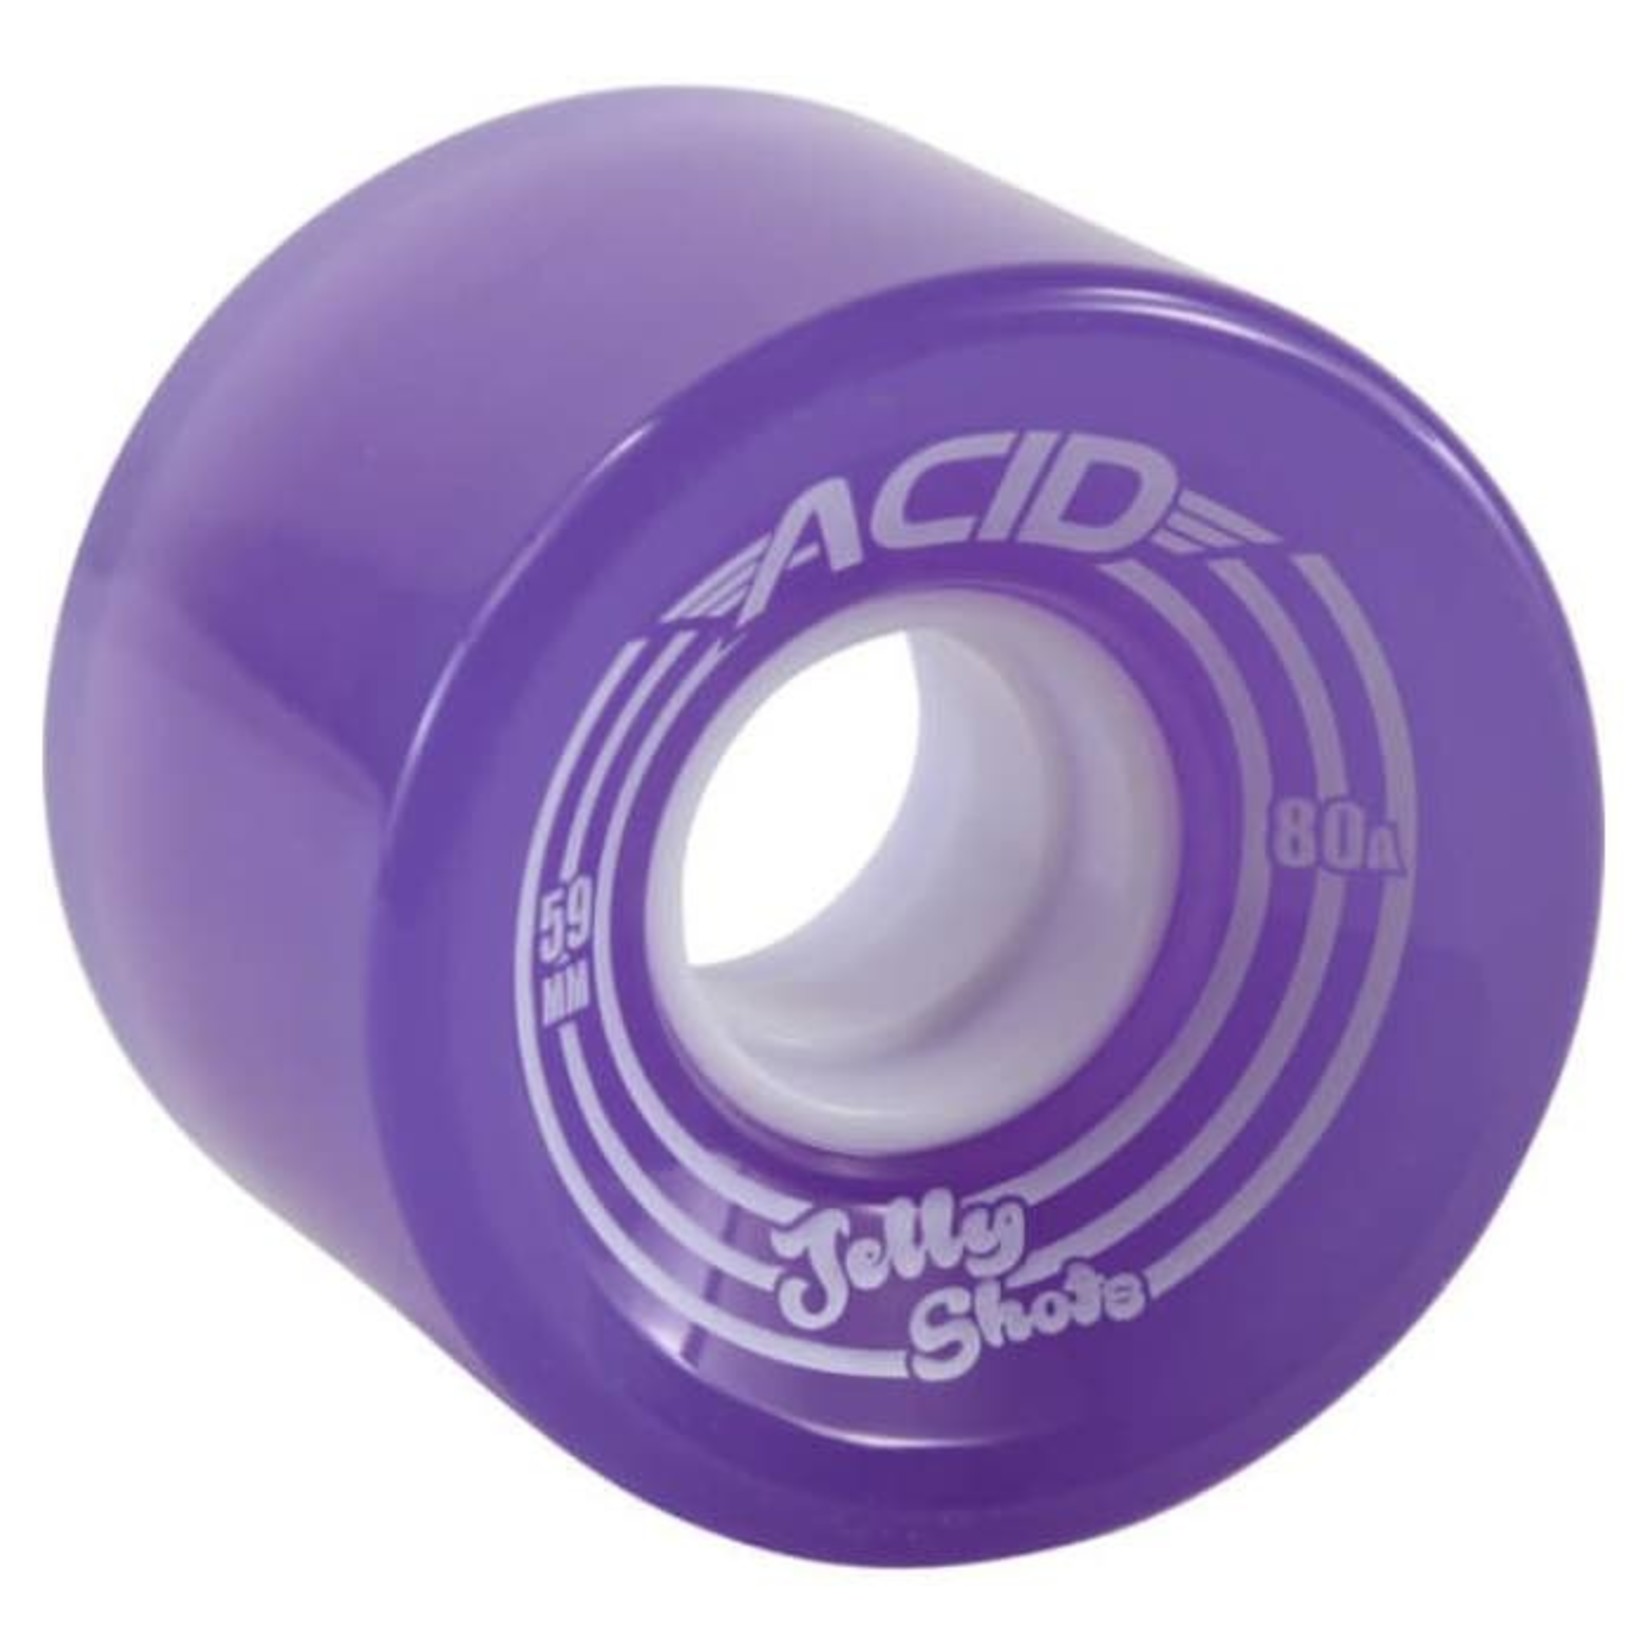 Acid Chemical Acid 80a Jelly Shots 59mm (Purple)